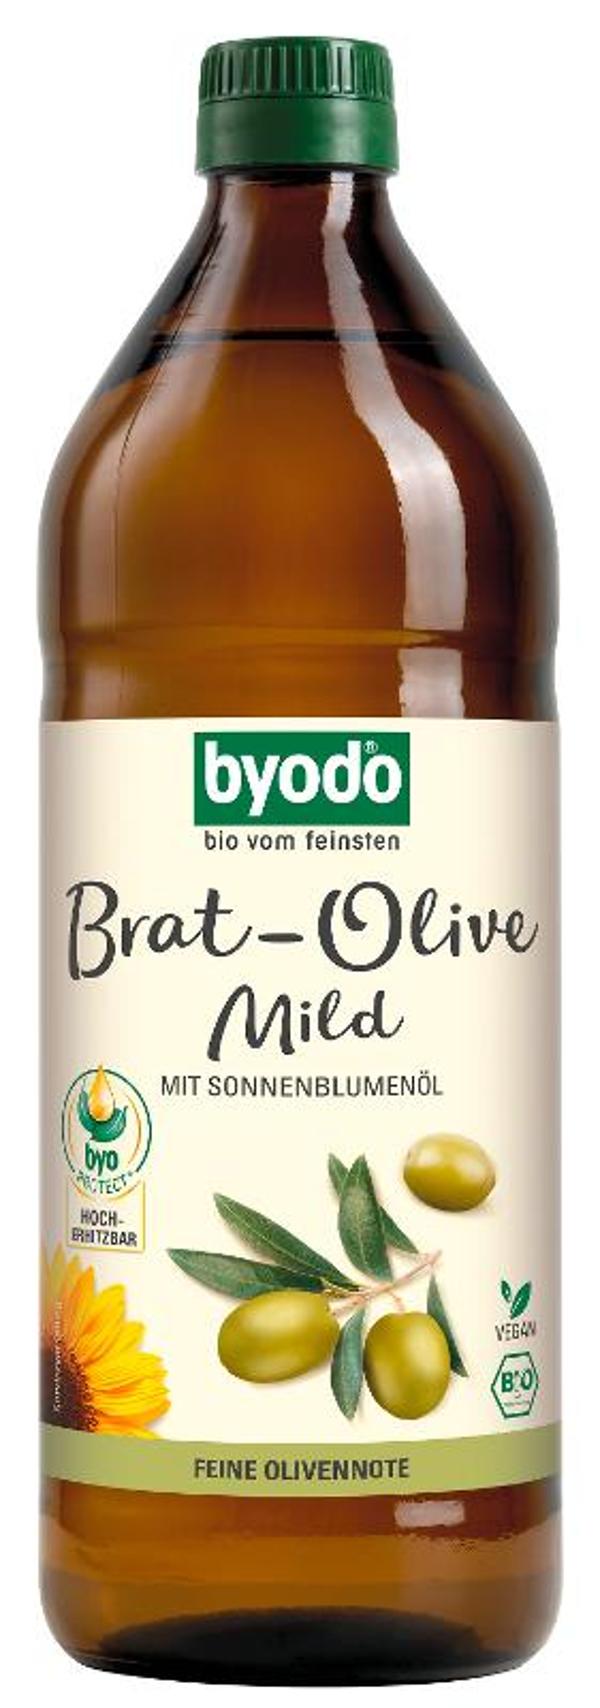 Produktfoto zu Bratöl Olive mild